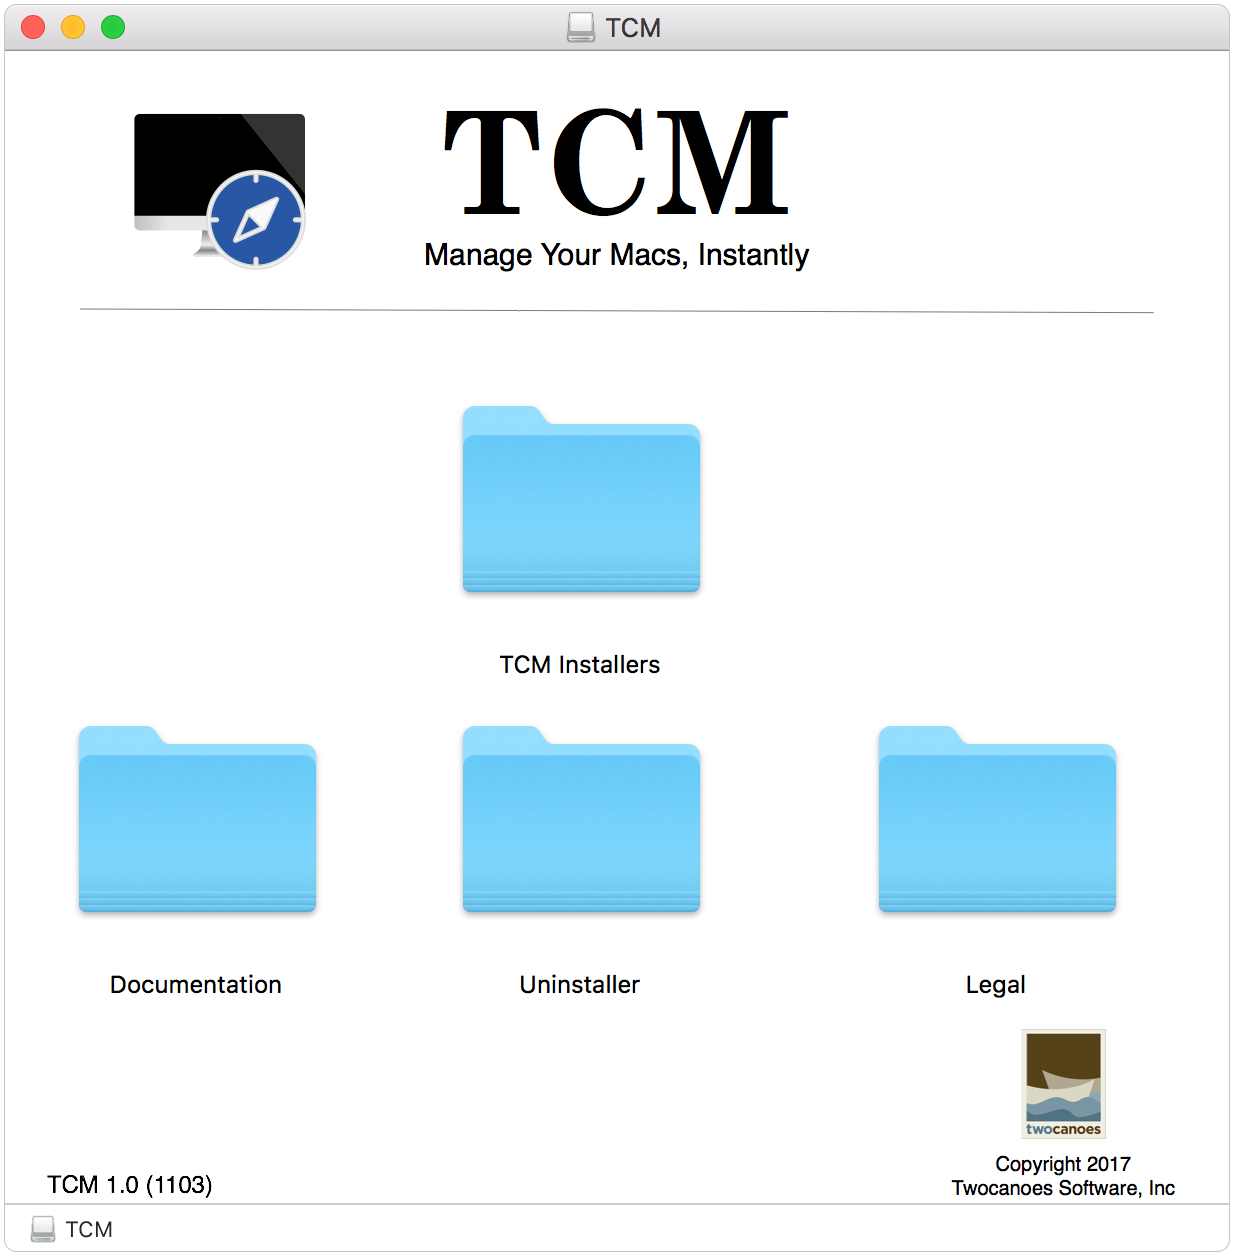 TCM Installer Image Contents